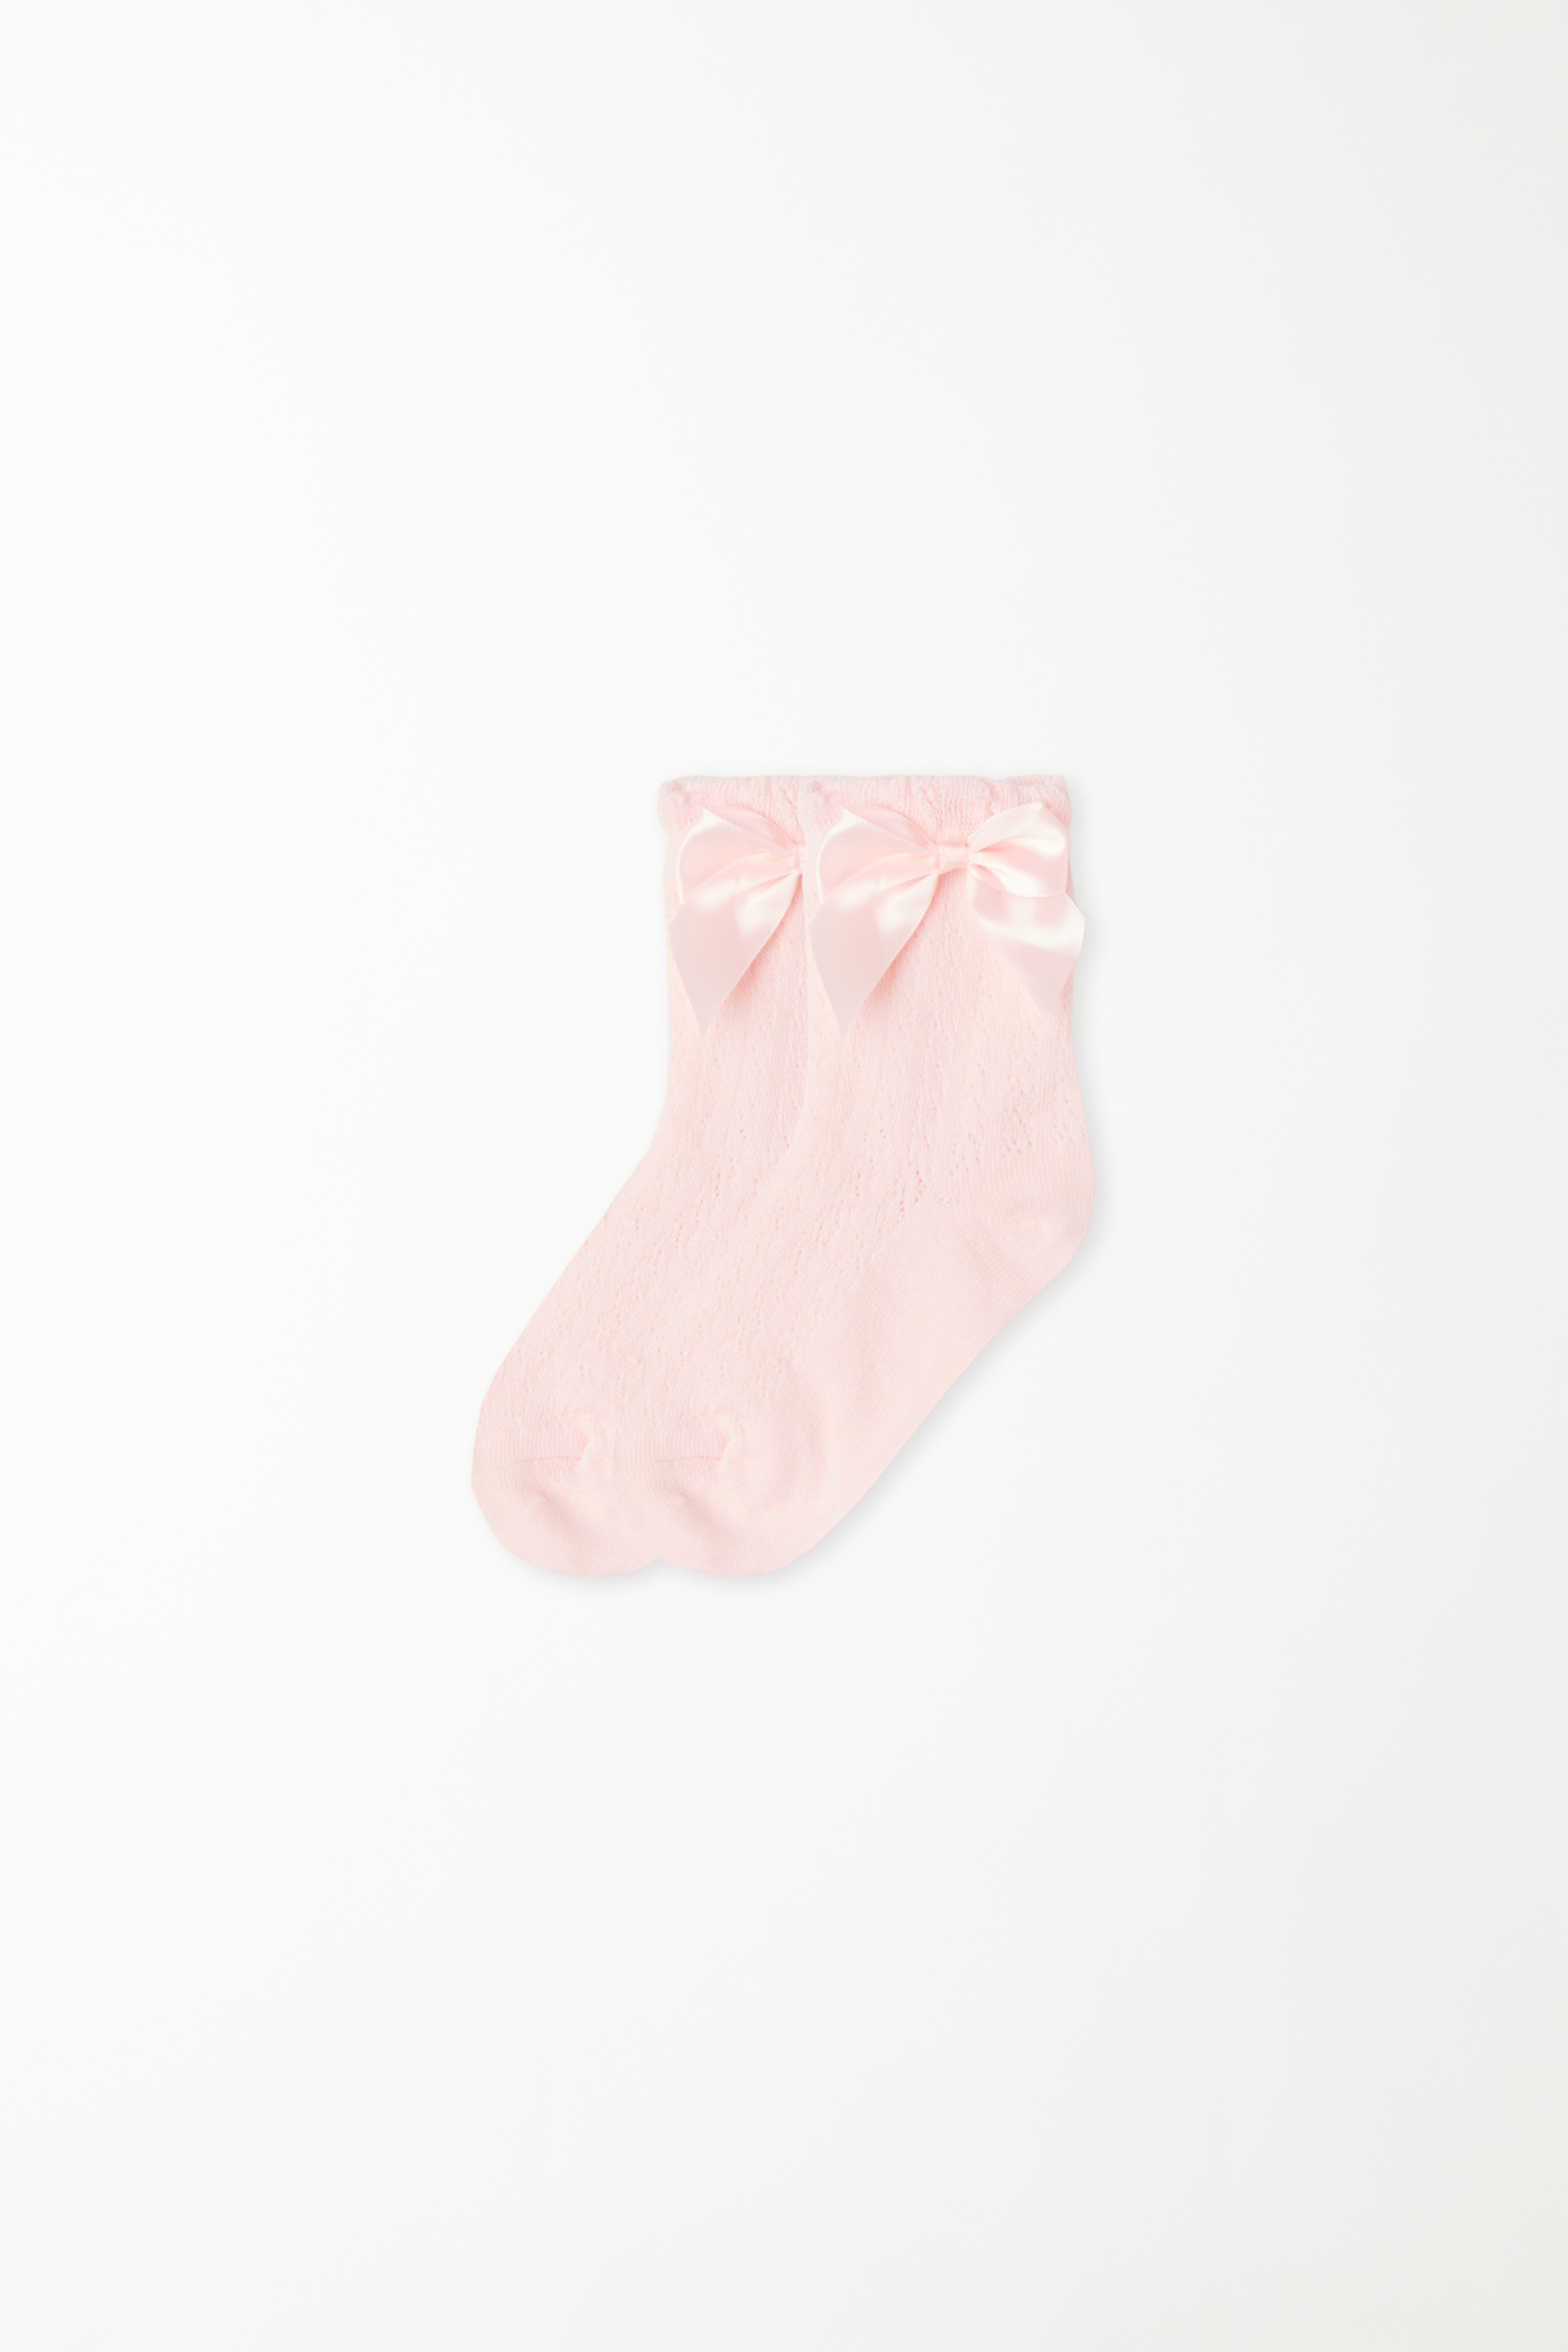 Dievčenské Nízke Bavlnené Ponožky so Saténovou Mašľou